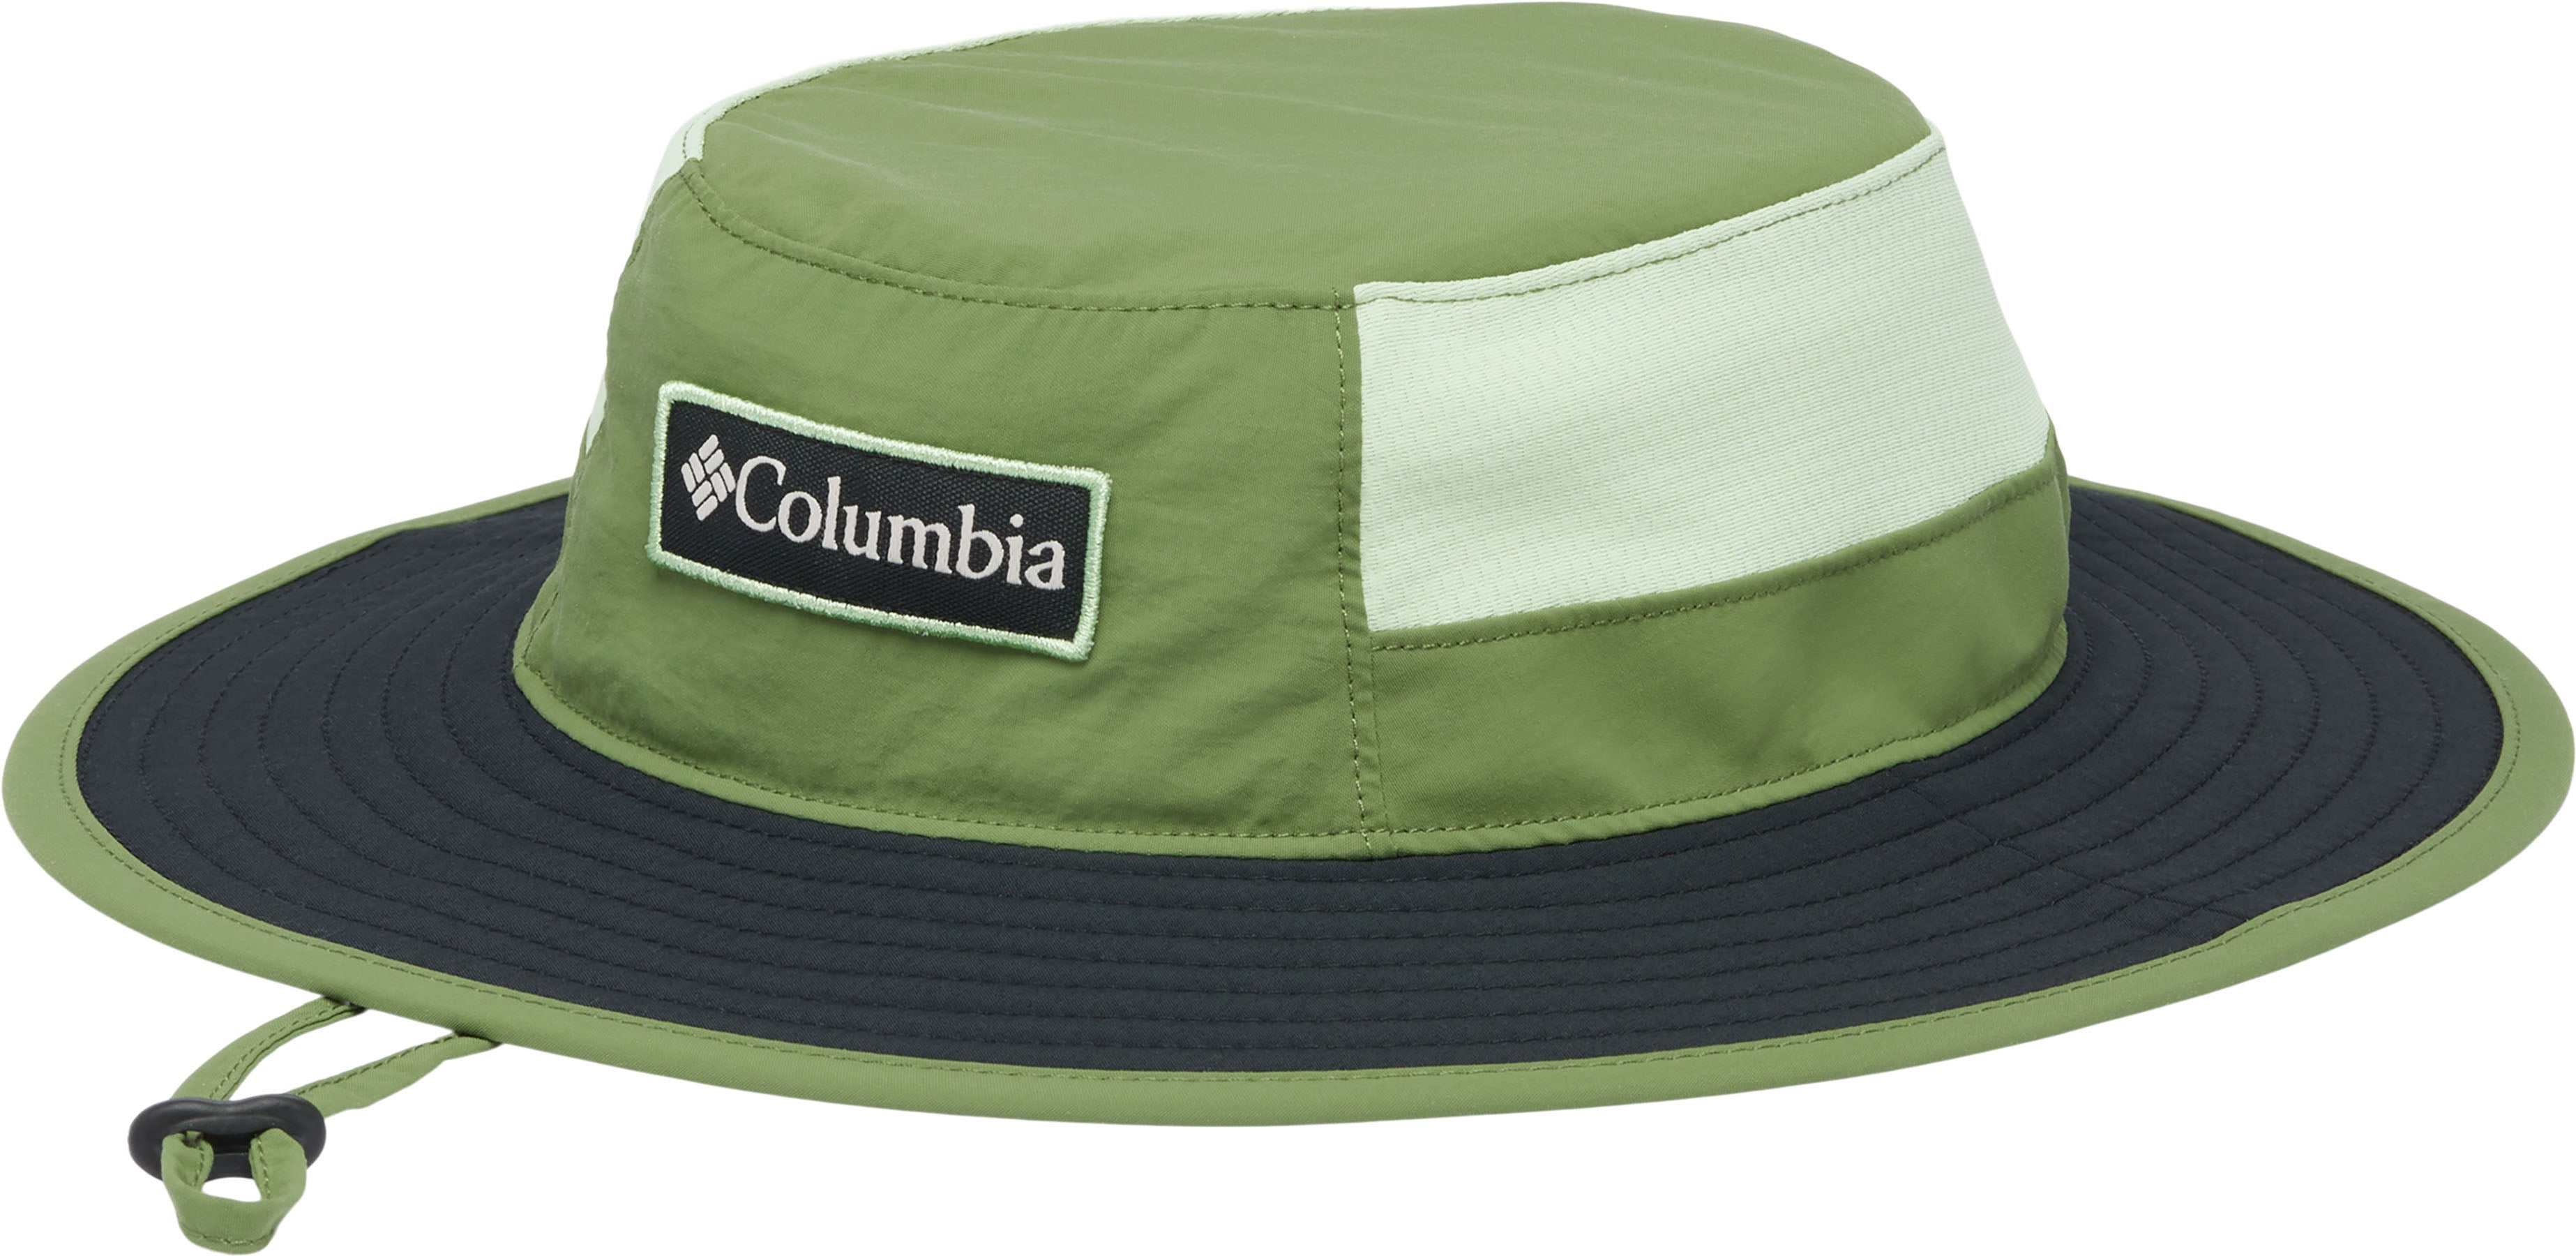 Columbia Sportswear Bora Bora Booney - Youth - Canteen / Sage Leaf / Black